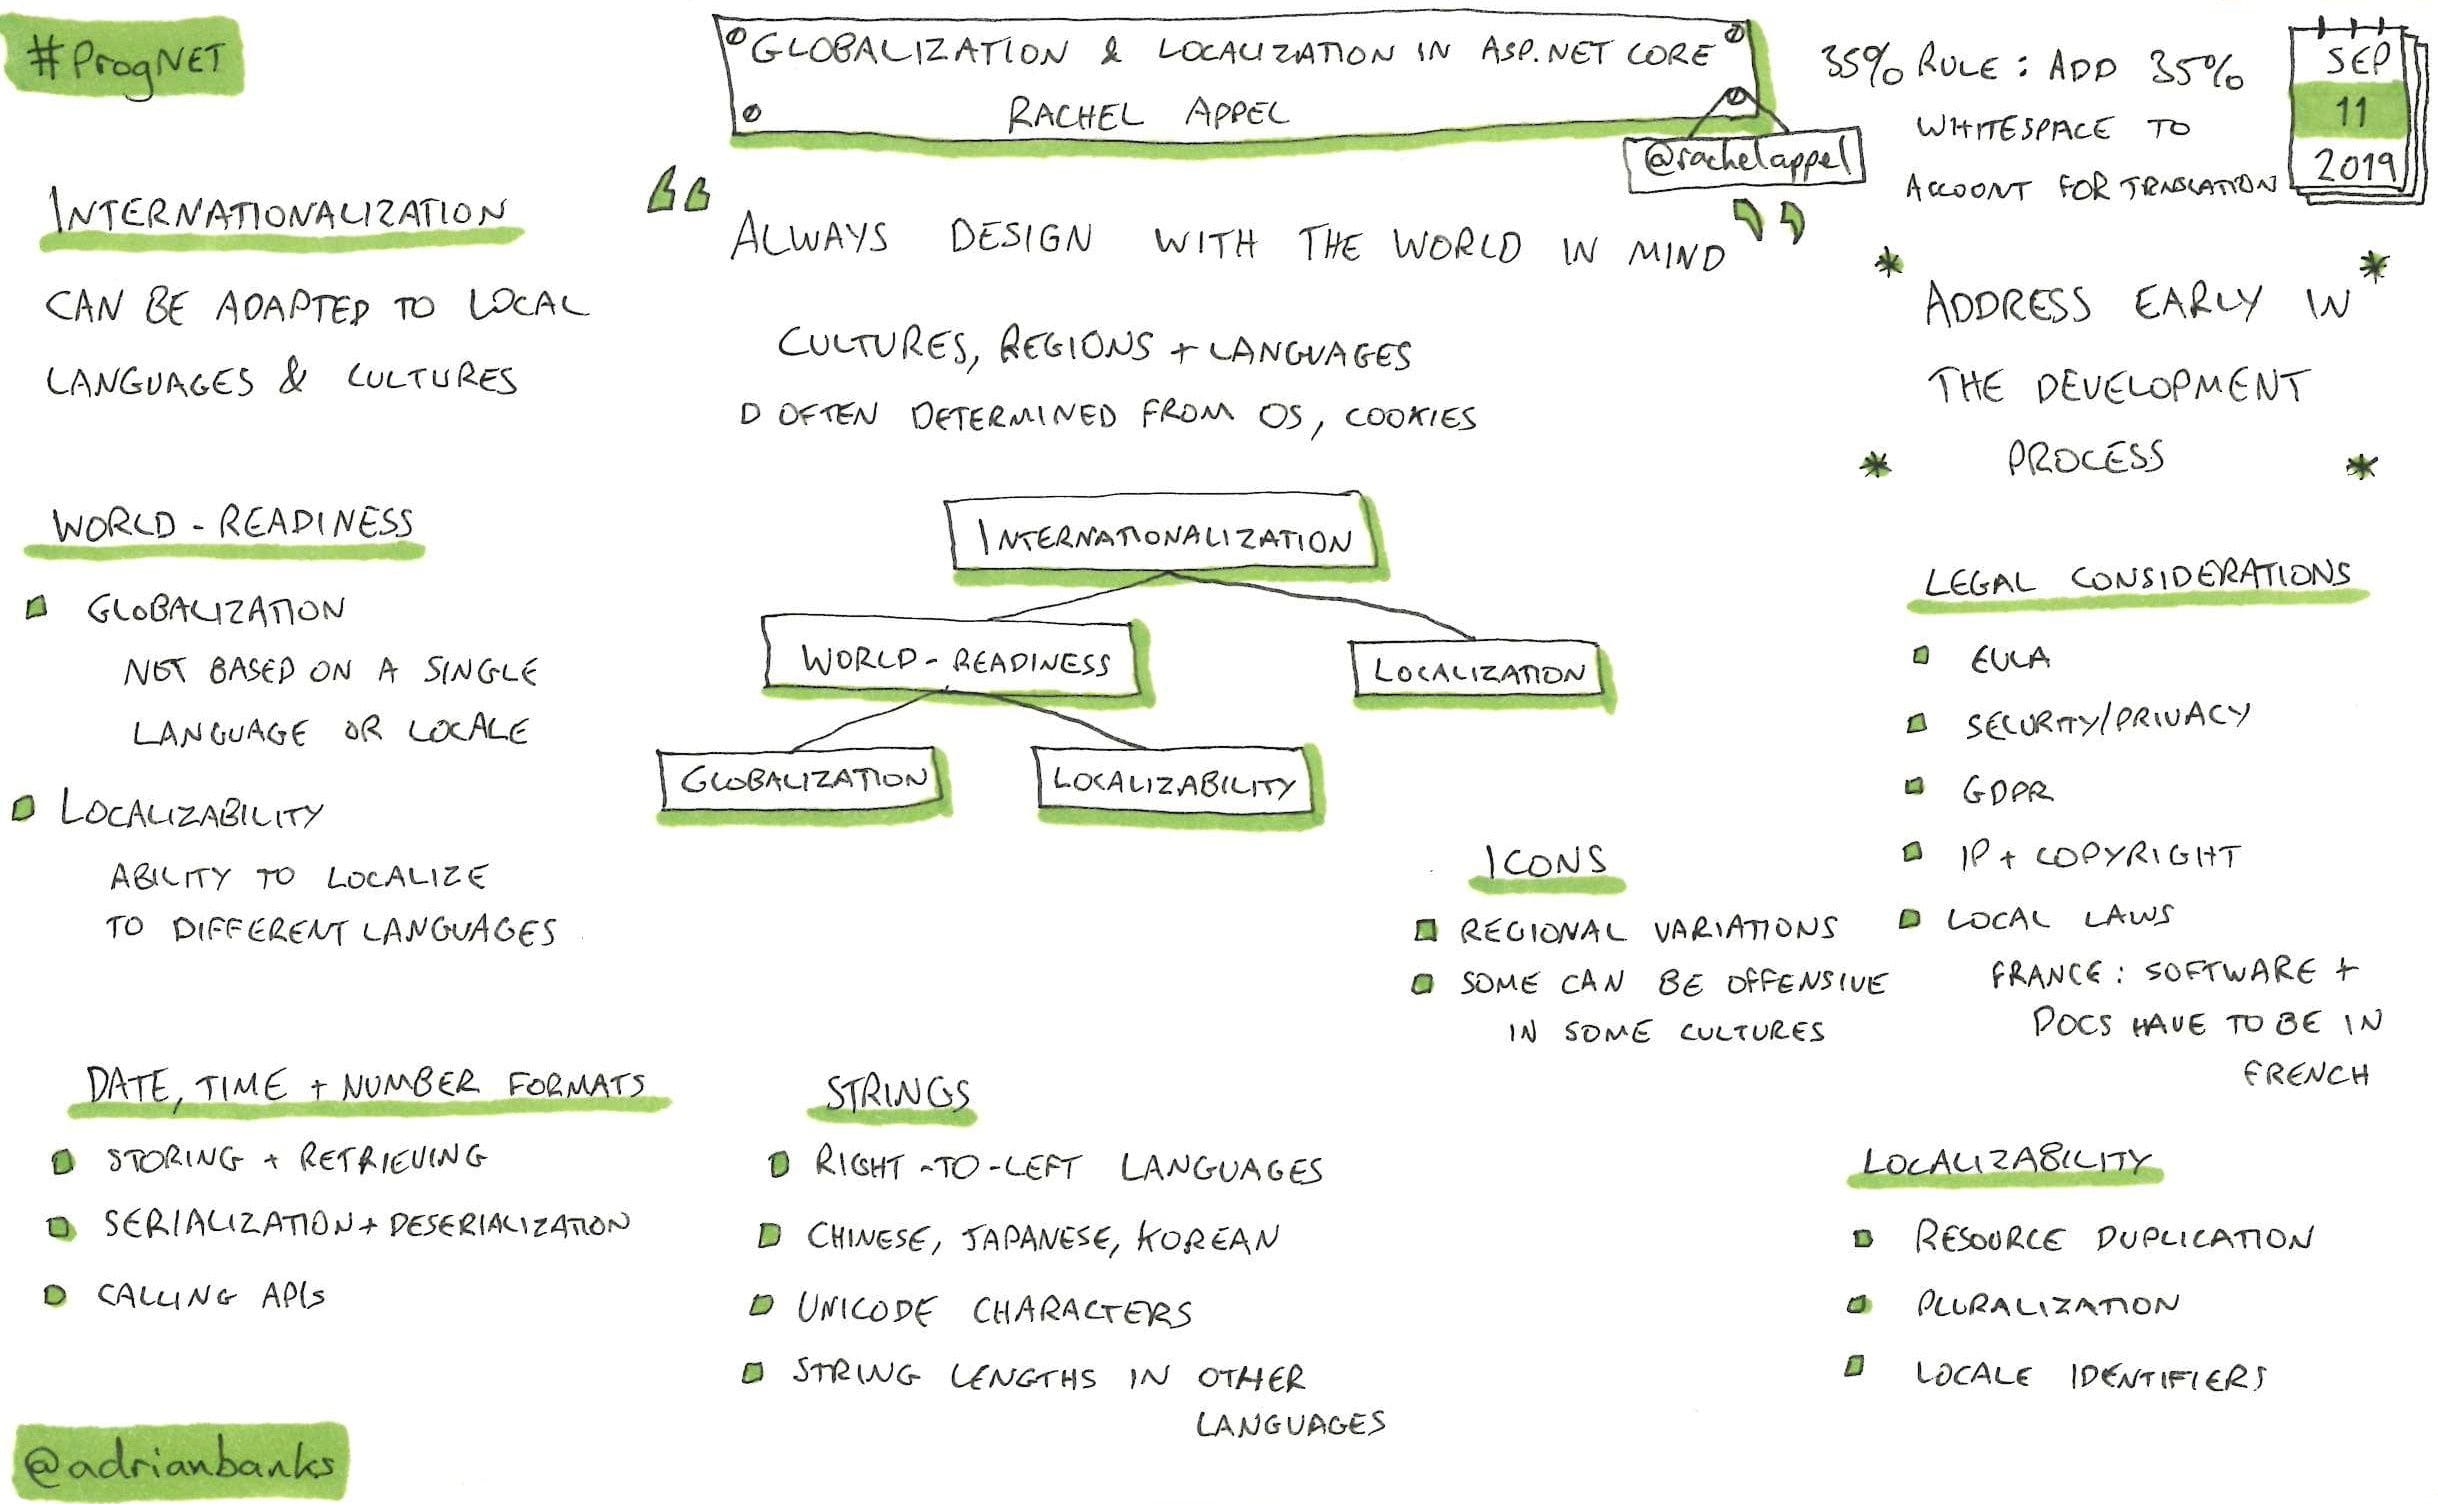 Globalization And Localization In ASP.Net Core by Rachel Appel